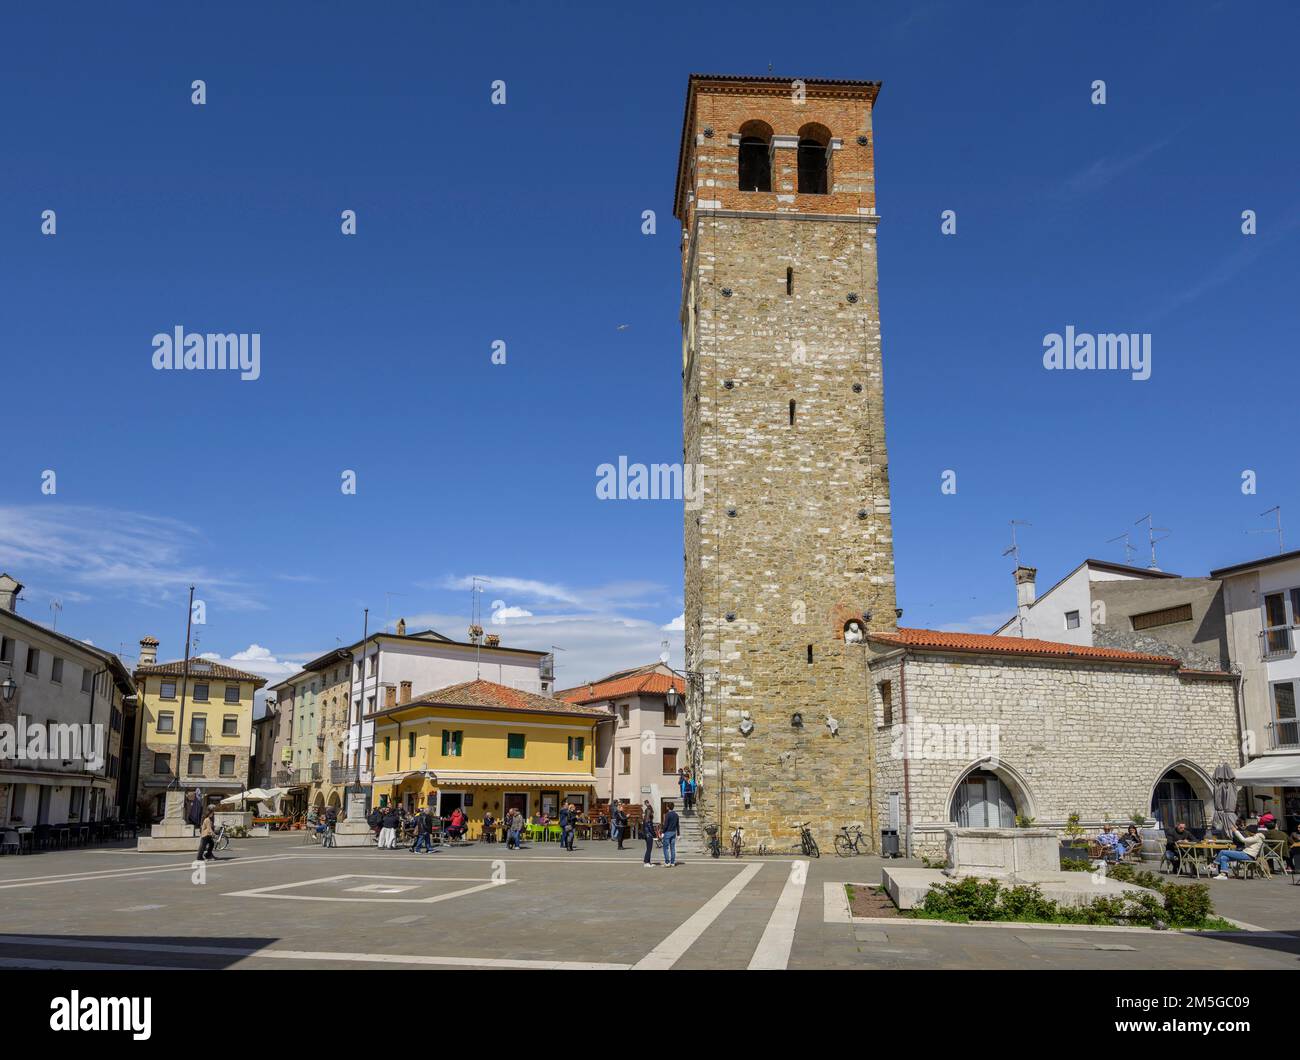 Main square with Torre Millenaria, Marano Lagunare, province of Udine, Italy Stock Photo